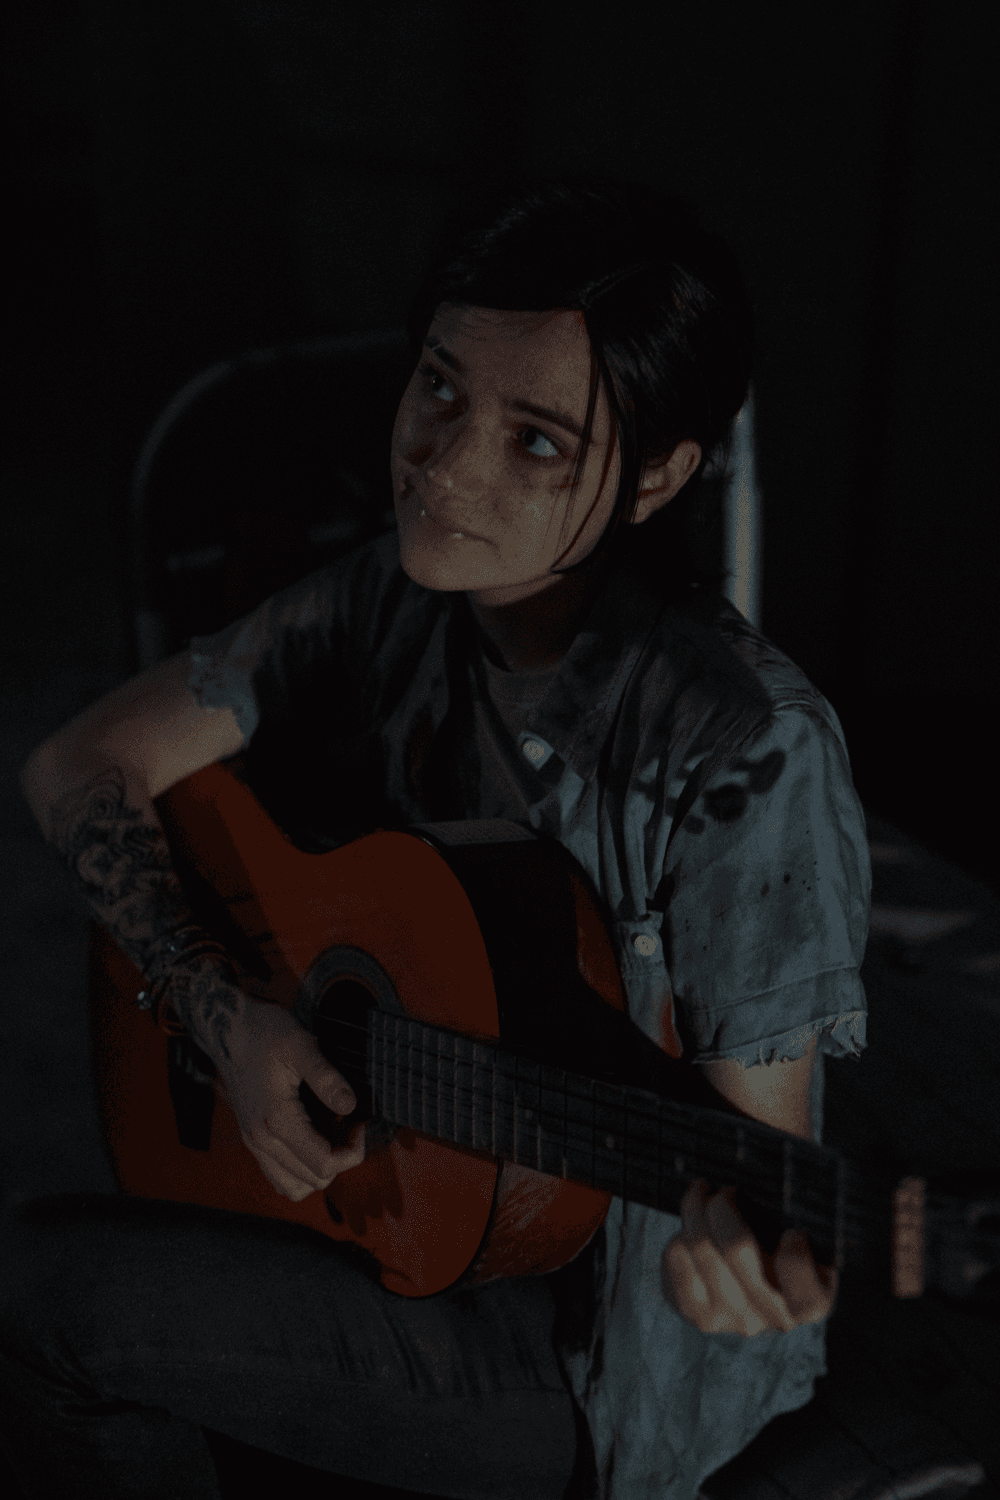 Ellie Williams - The Last of Us Part II Cosplay